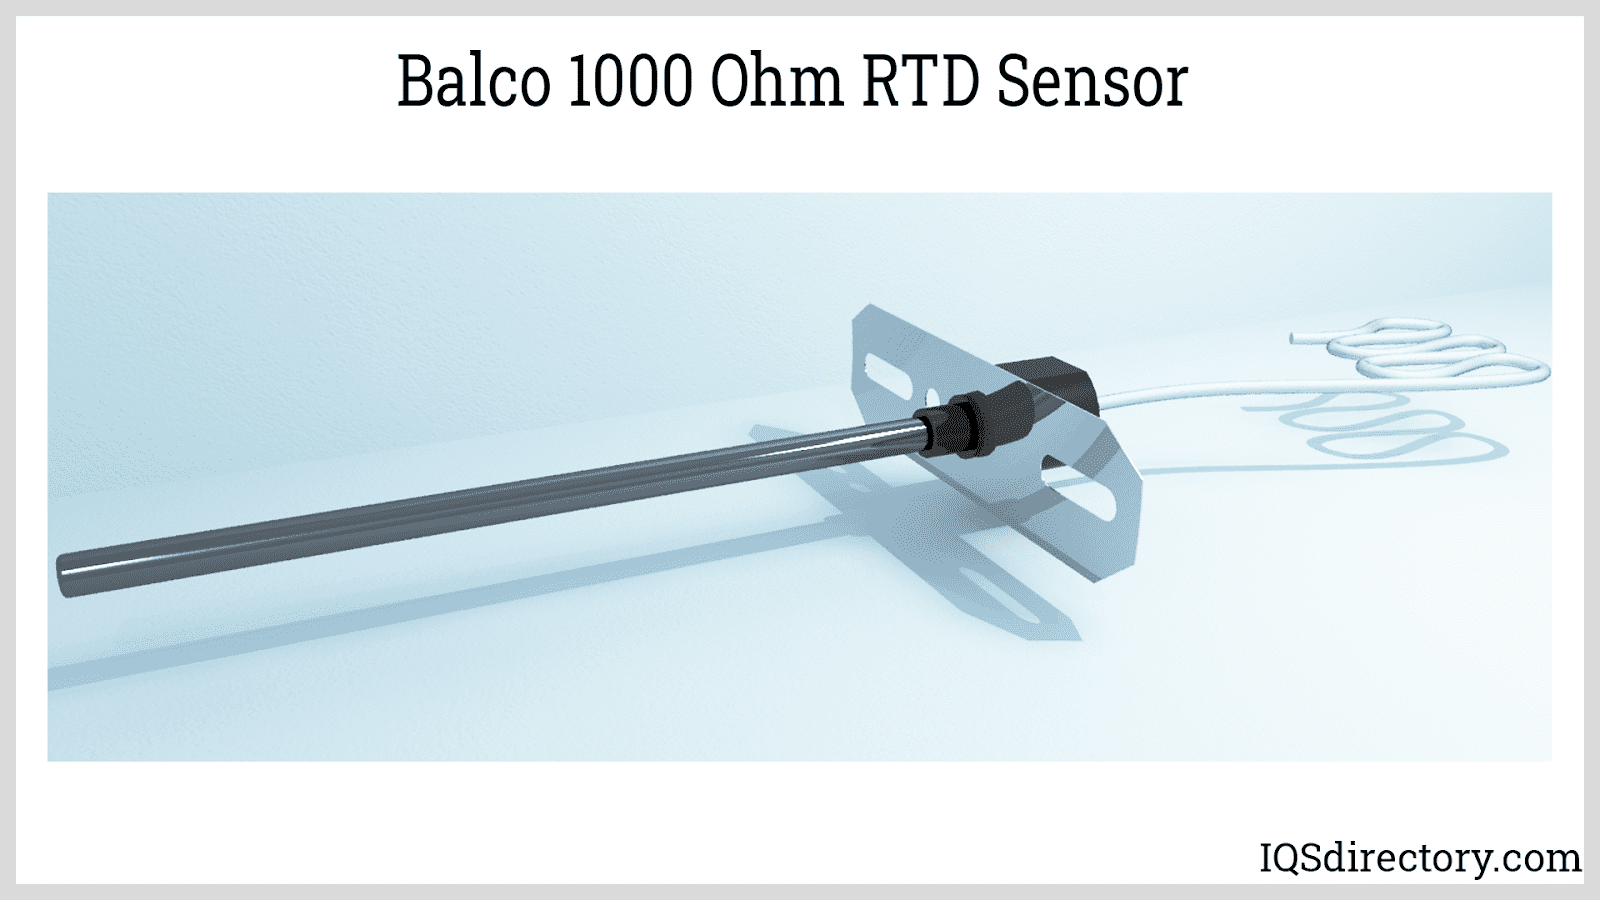 https://www.iqsdirectory.com/articles/thermocouple/rtd-sensors/balco-1000-ohm-rtd-sensor.png